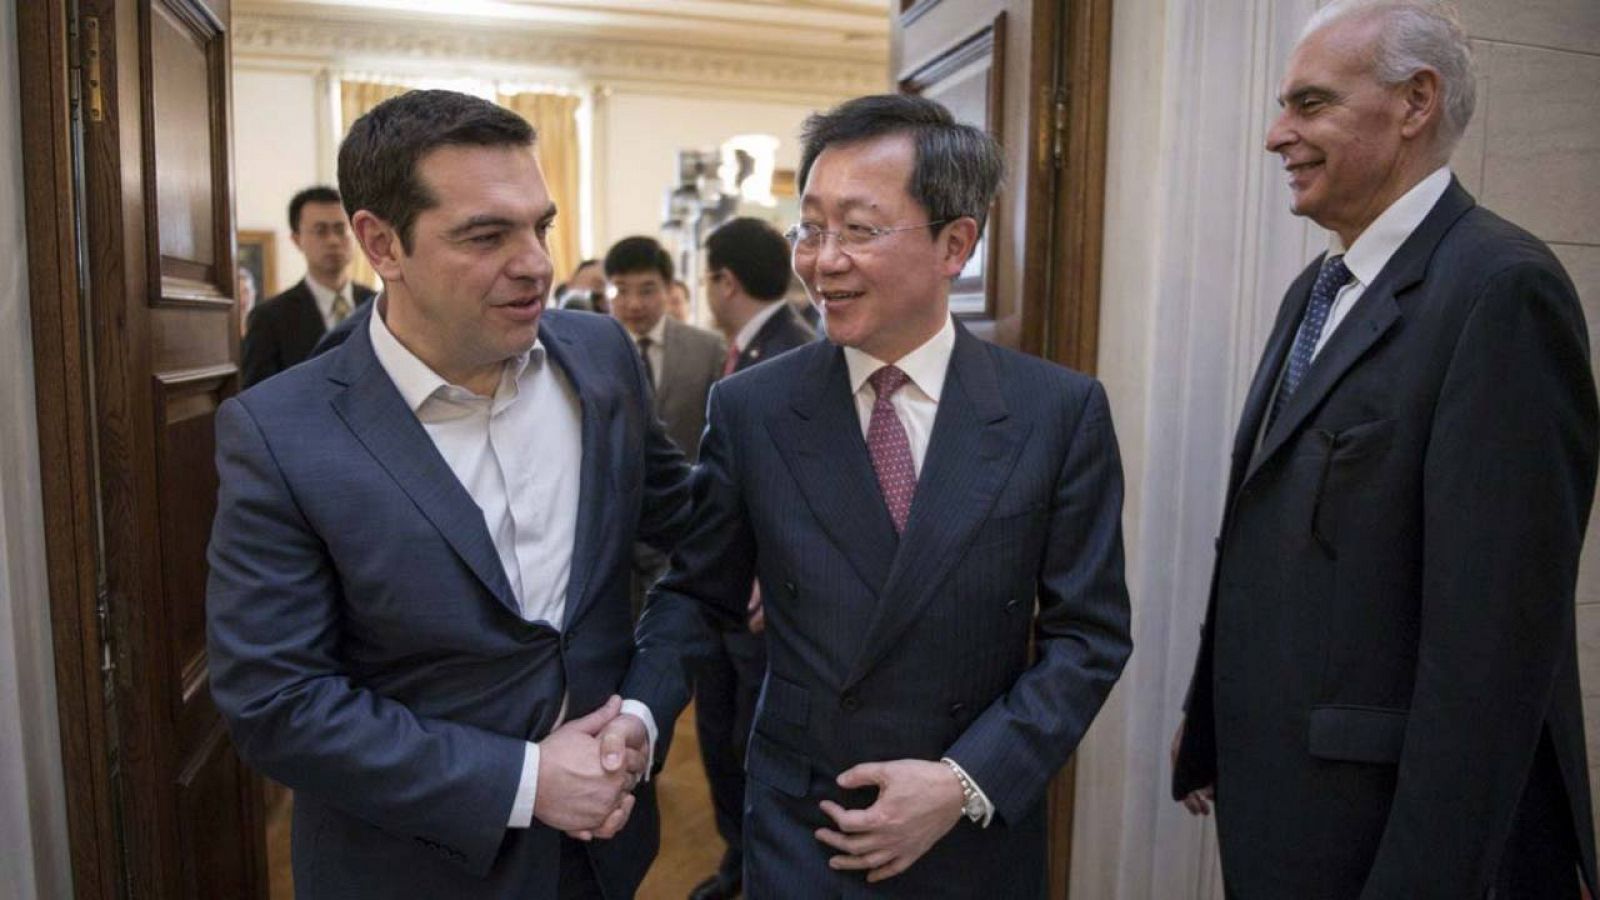 El primer ministro griego, Alexis Tsipras, recibe al presidente de COSCO, Xu Lirong, en su residencia oficial en Atenas